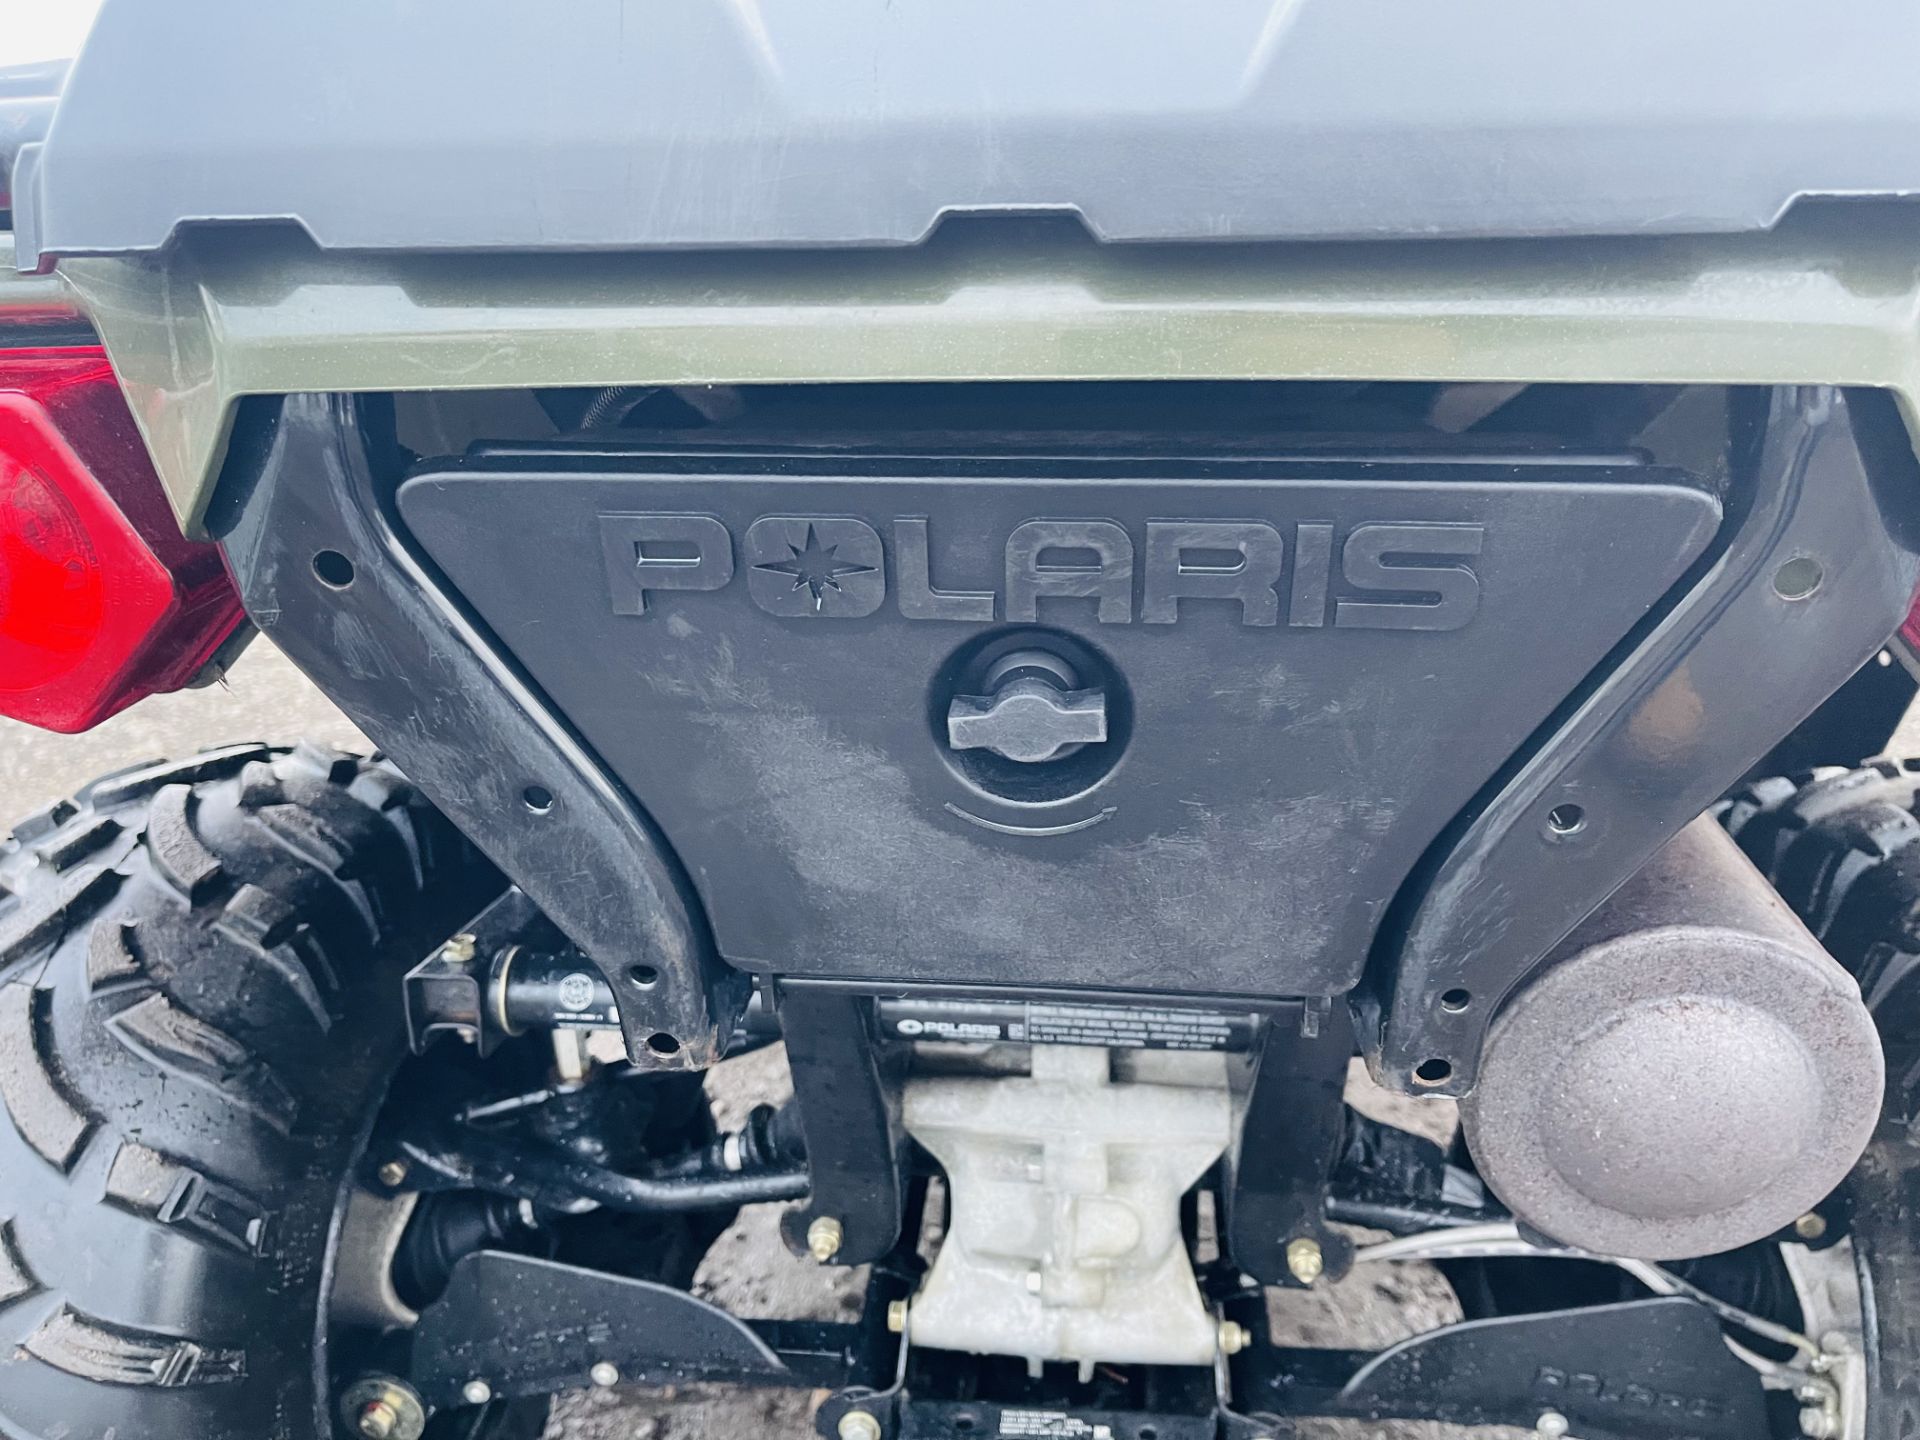 Polaris Sportsman 450 H.O EFI '2020 Year' 4WD - ATV QuadBike - Low Mileage - Image 22 of 30